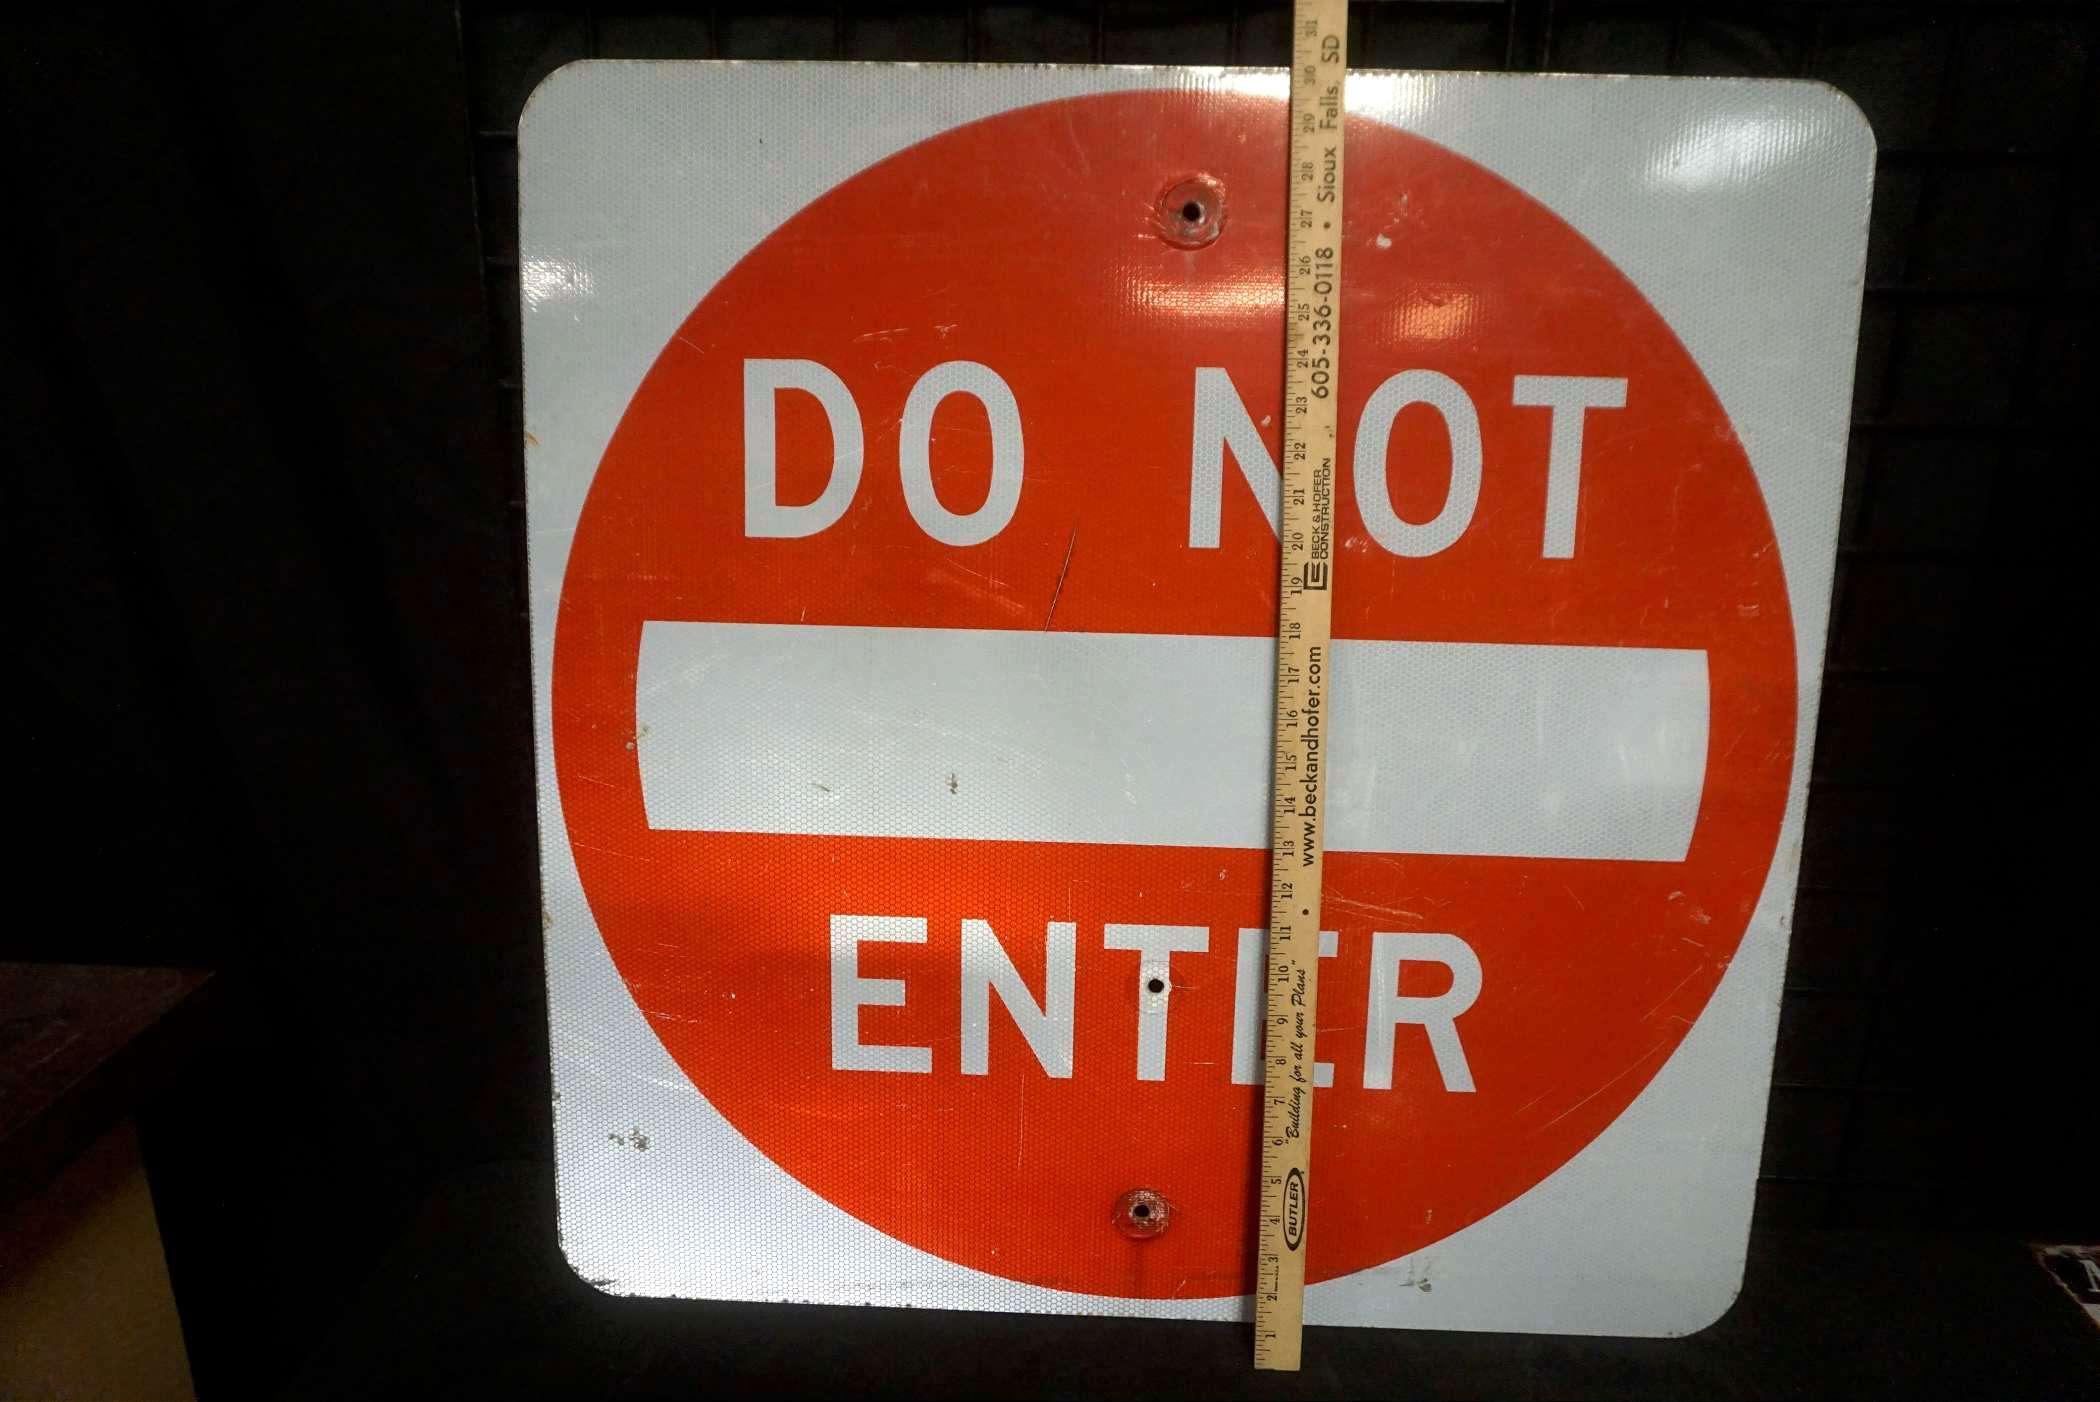 Metal "Do Not Enter" Sign